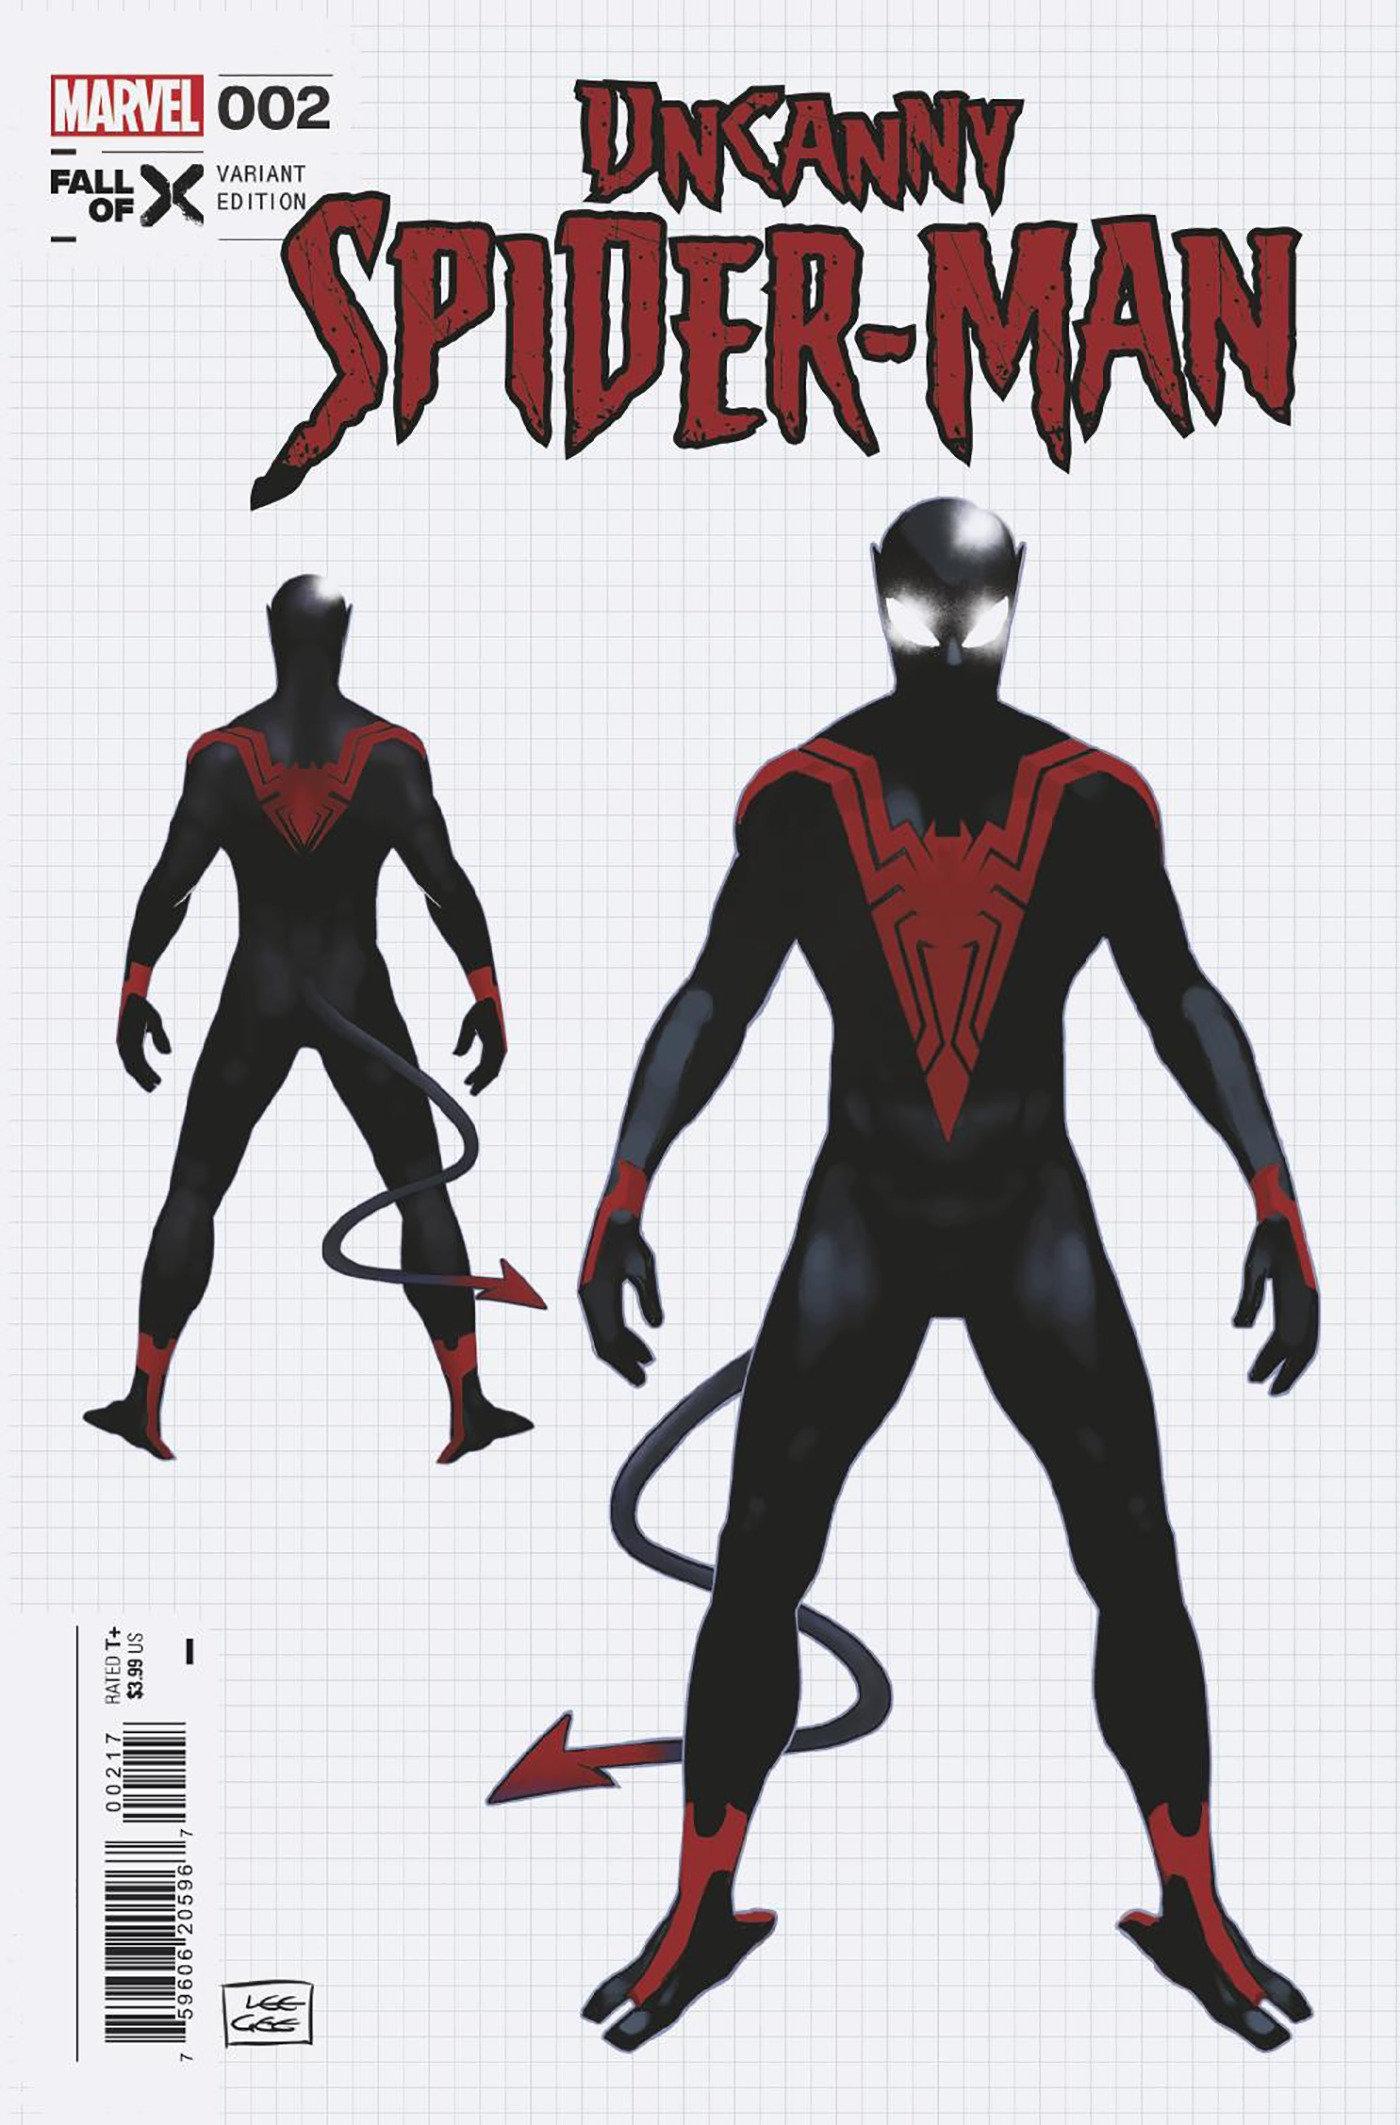 Uncanny Spider-Man #2 Lee Garbett Design Variant (Fall of the X-Men) 1 for 10 Incentive